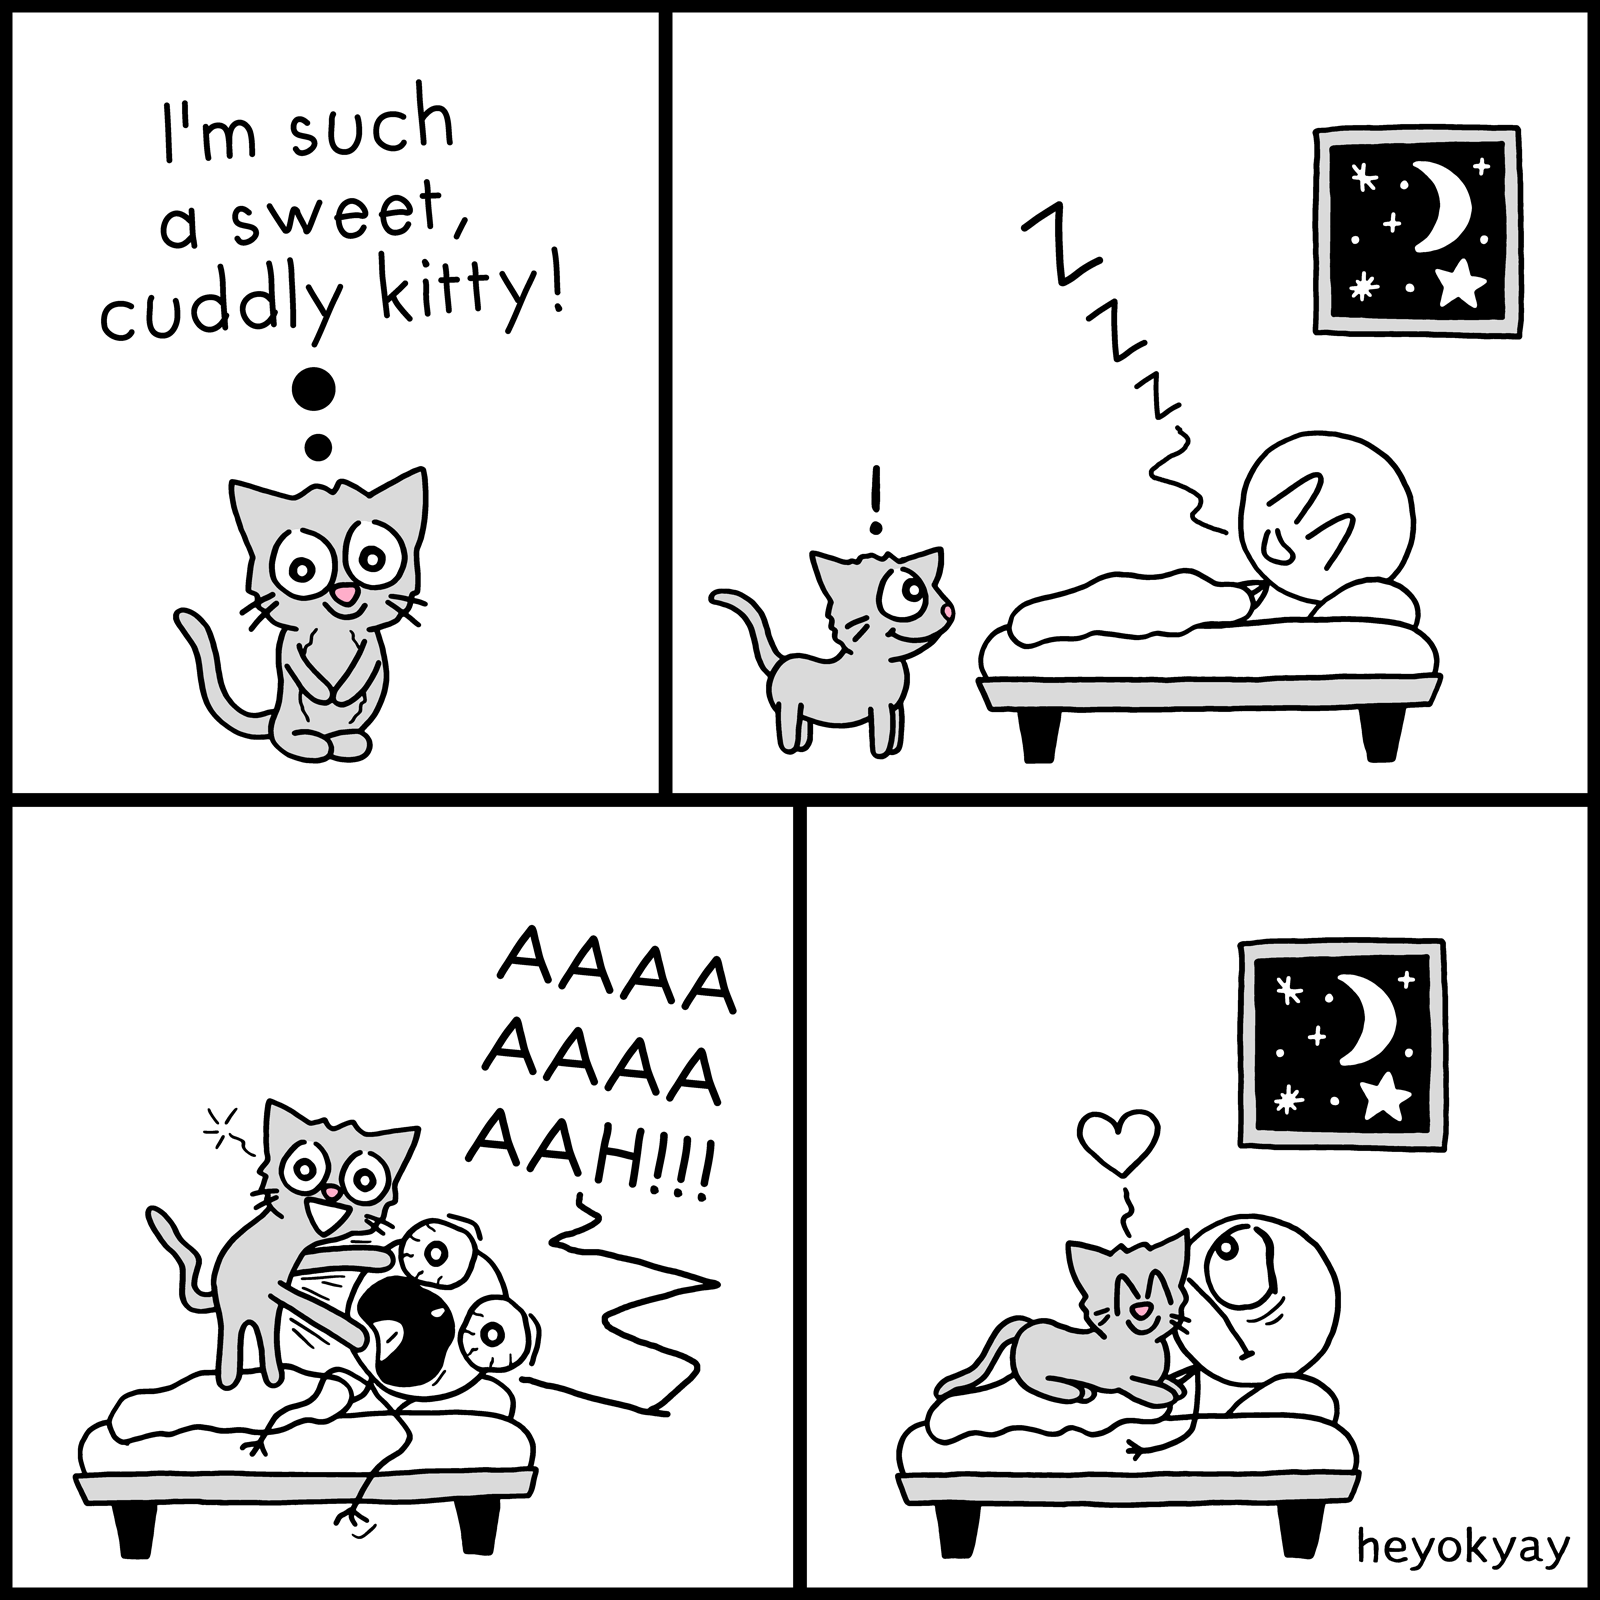 Cuddly Kitty heyokyay comic